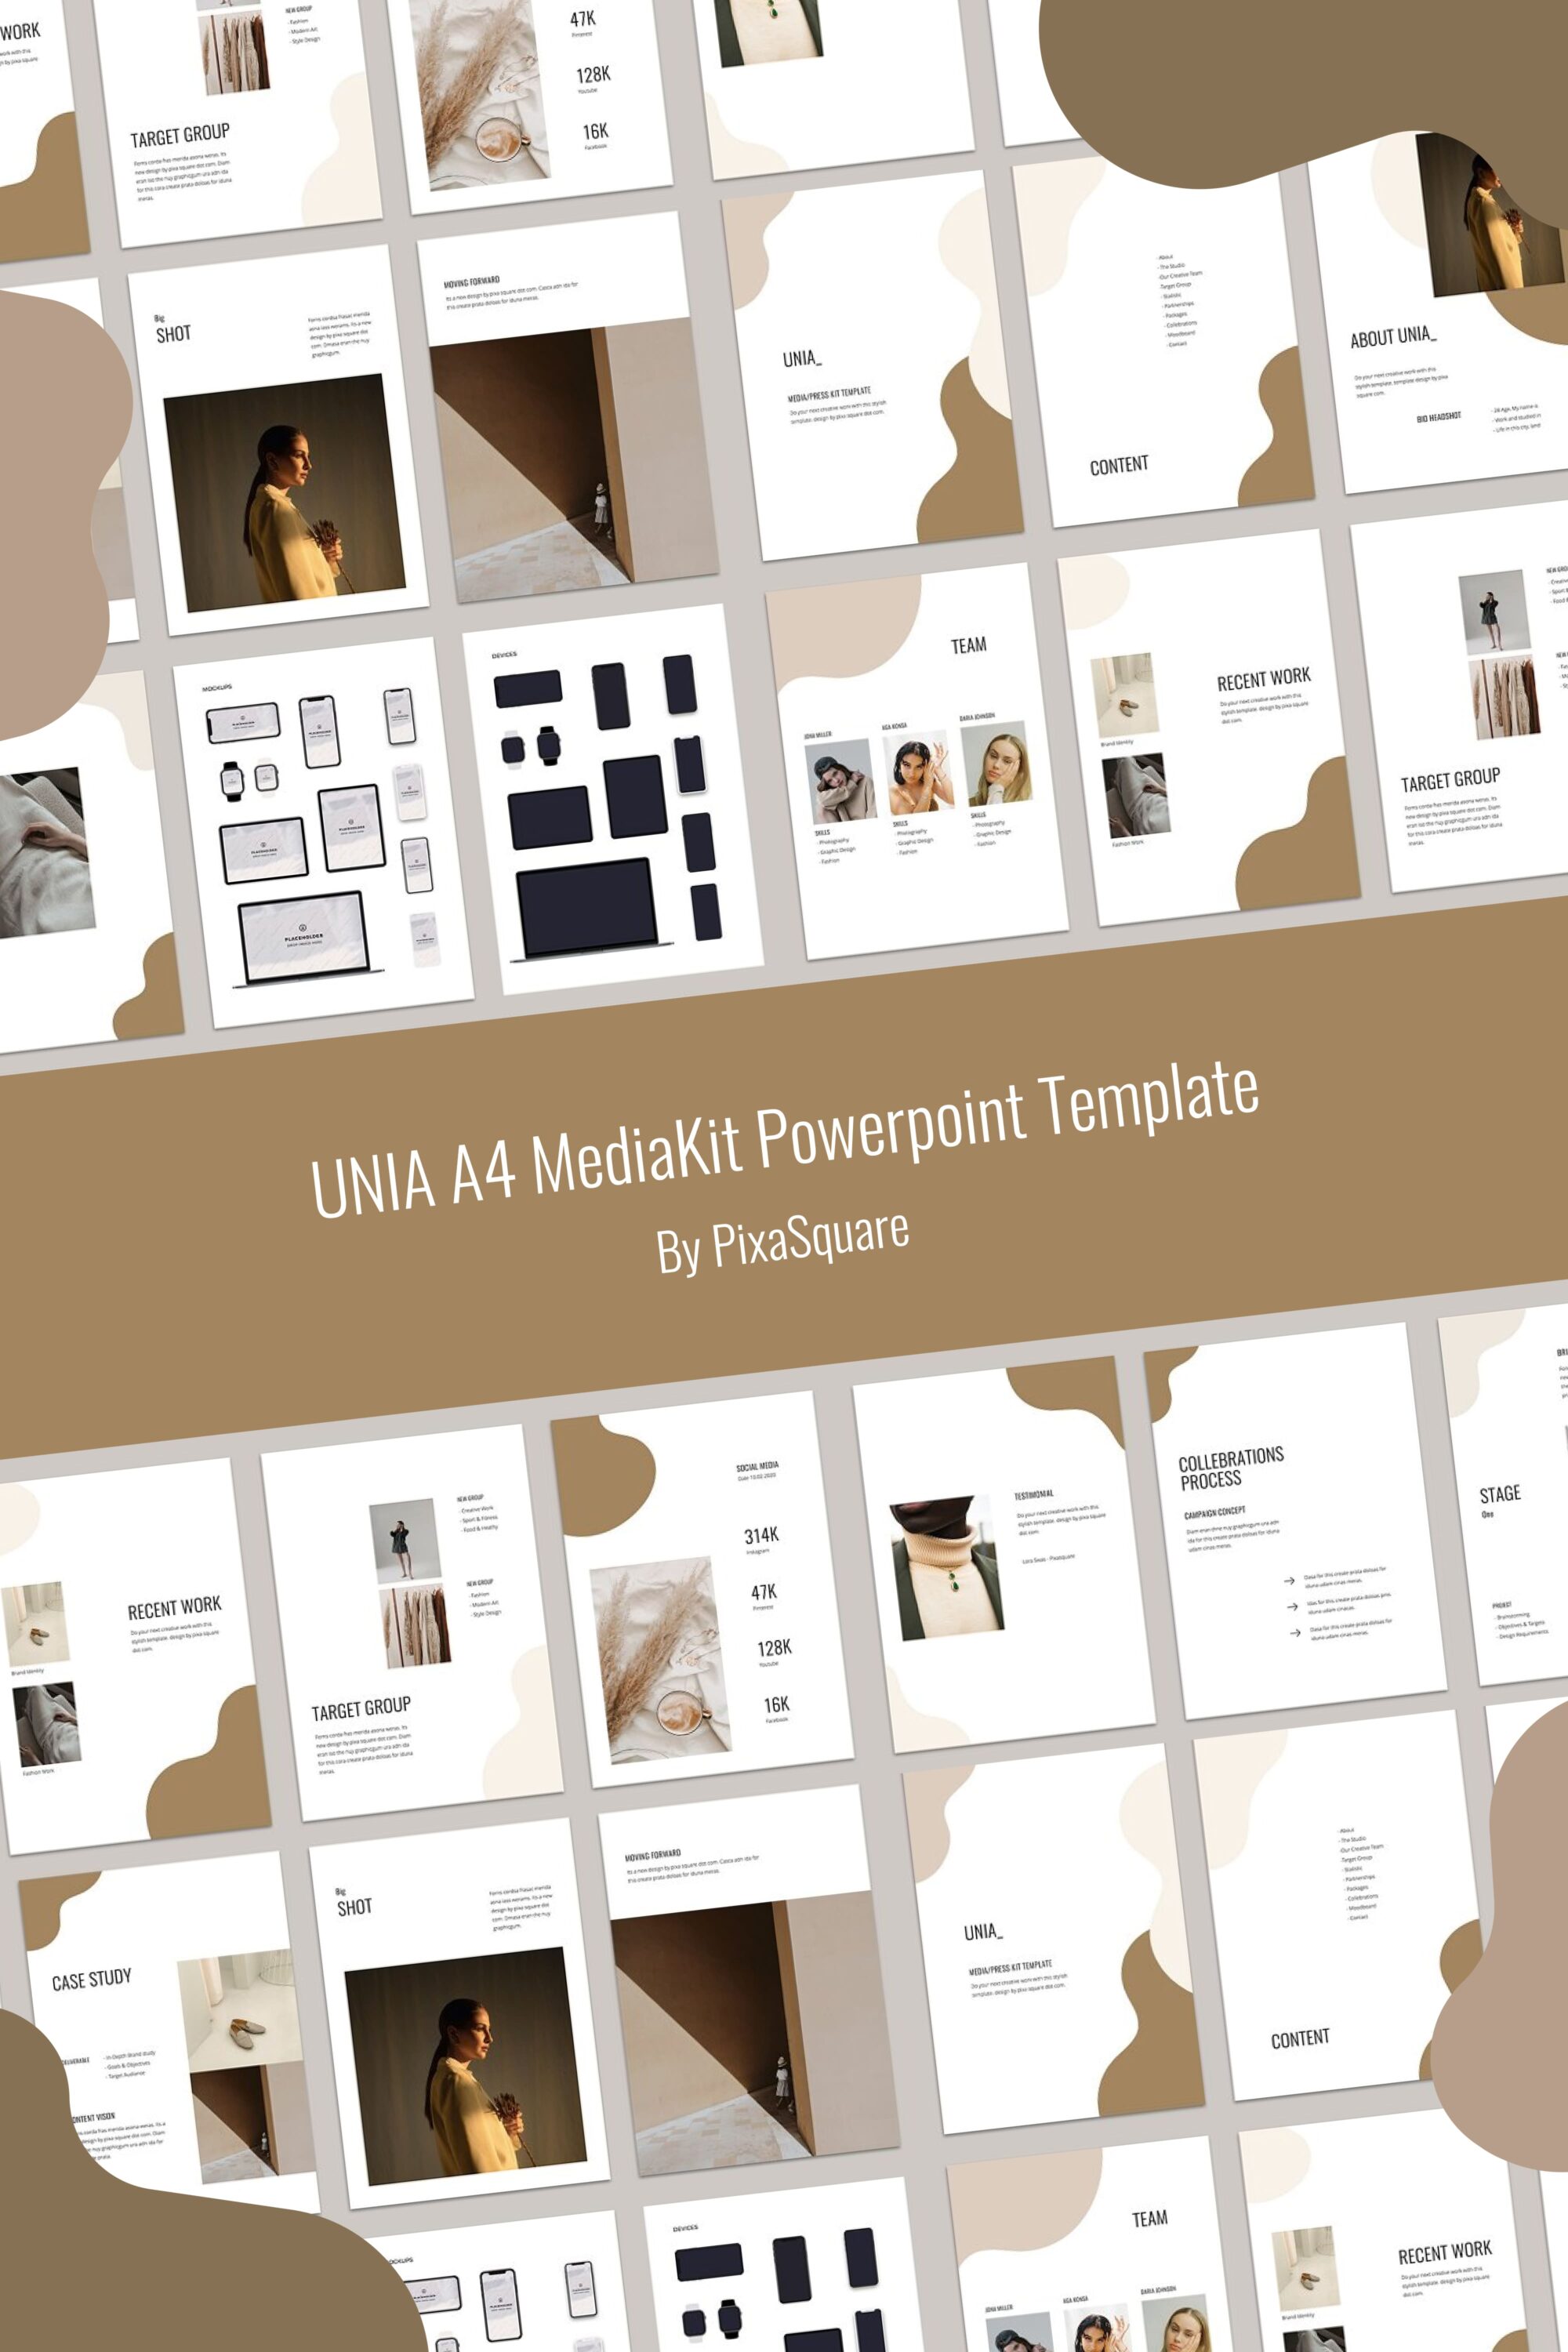 unia a4 mediakit powerpoint template 03